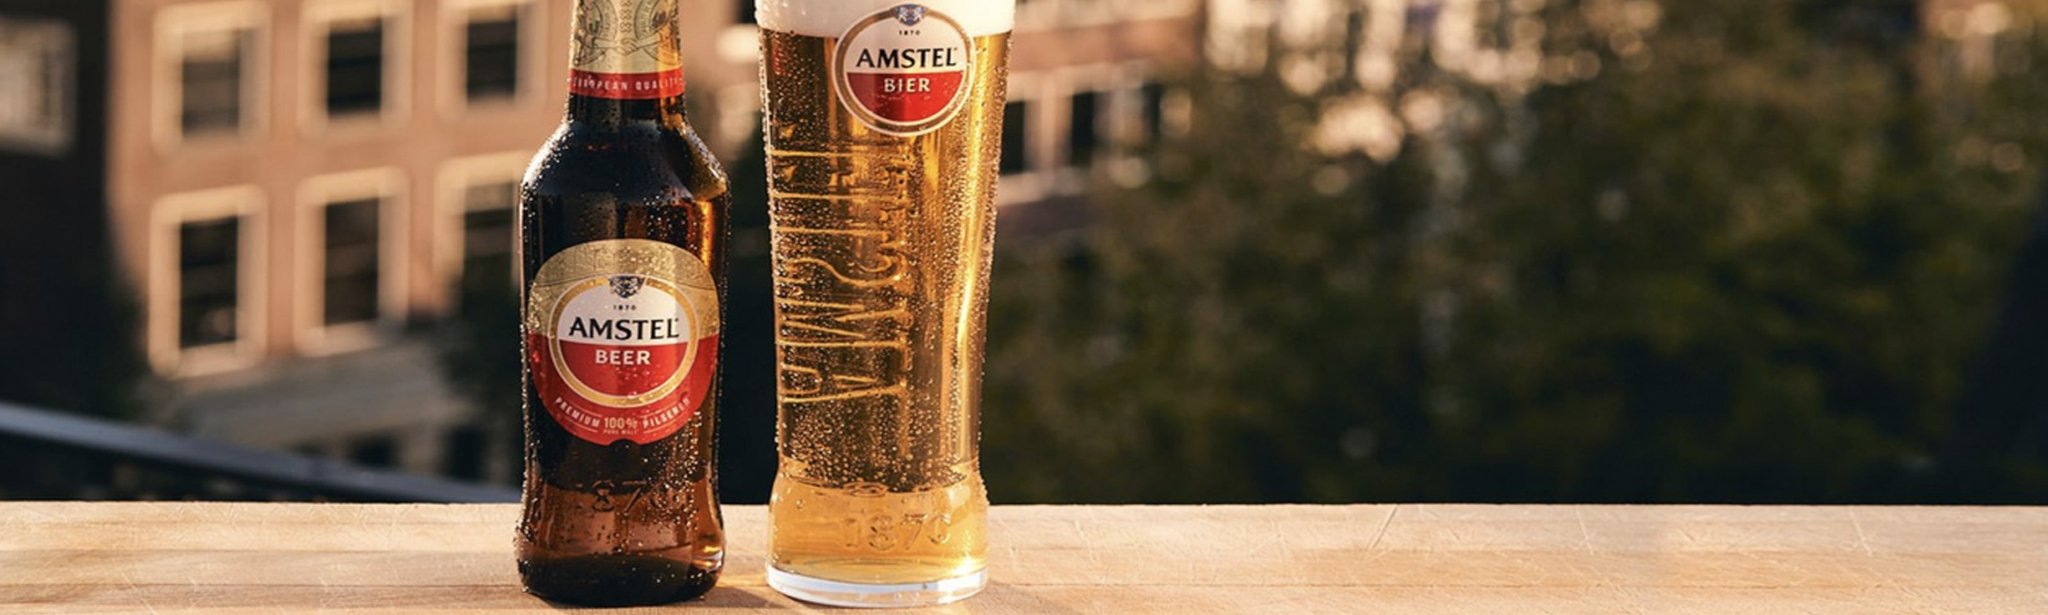 Amstel - The Bottle Club